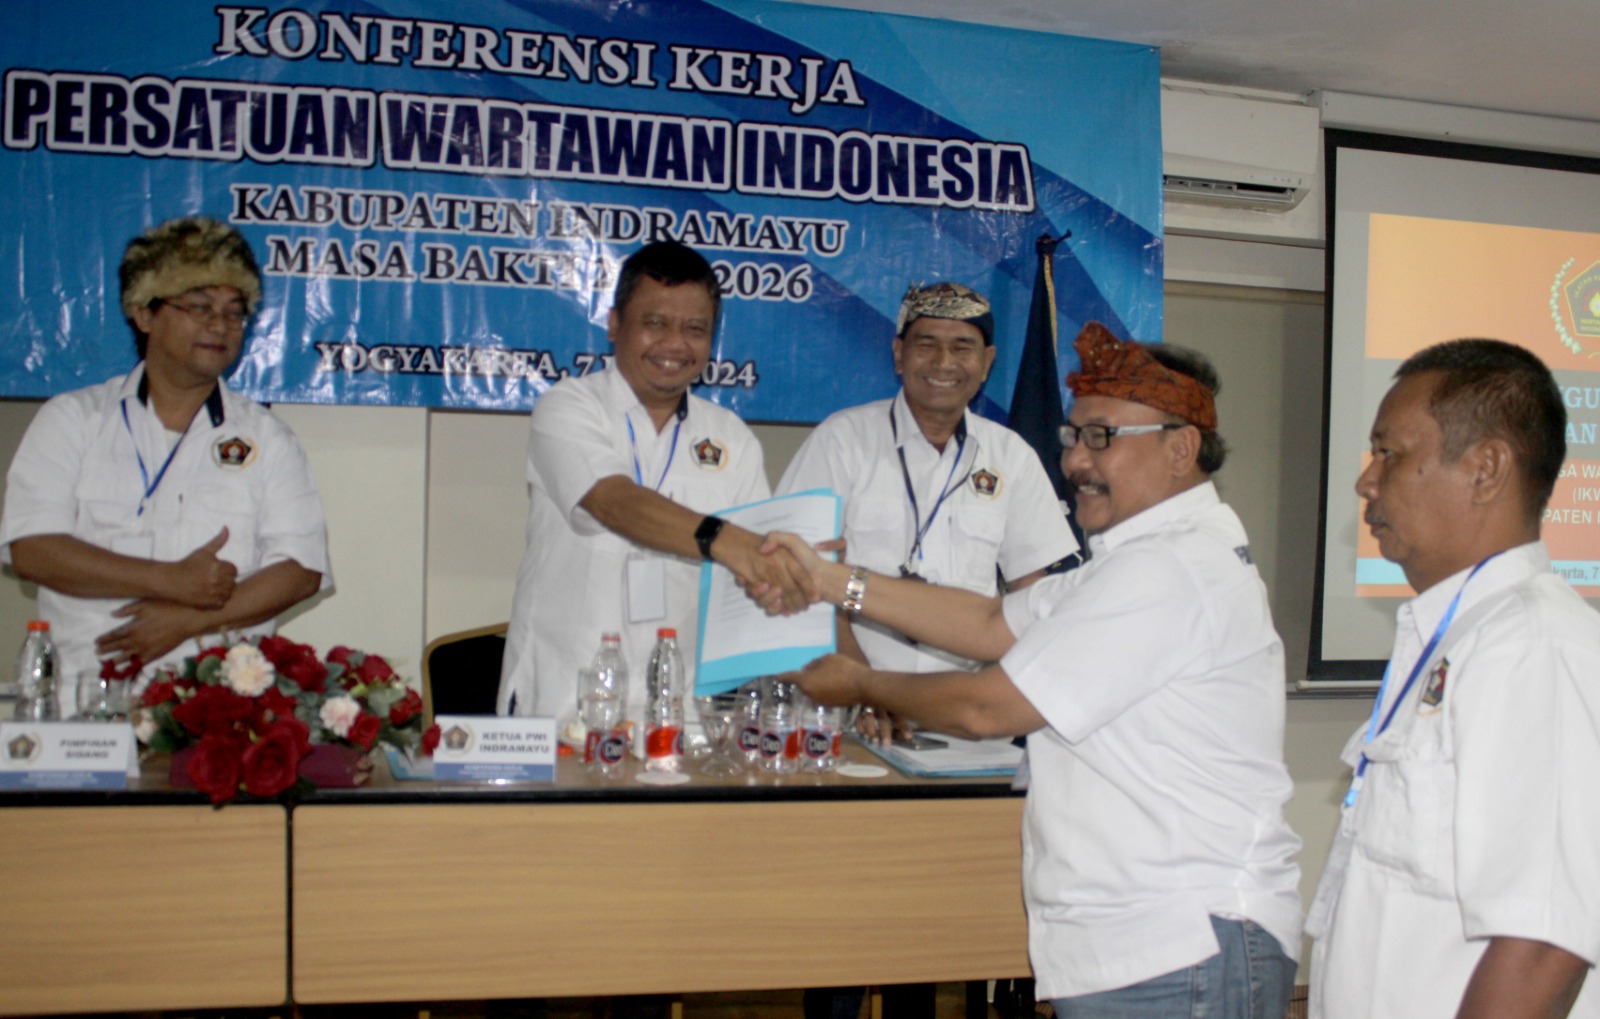 Dari Yogyakarta, Persatuan Wartawan Indonesia Kabupaten Indramayu Gelar Konfrensi Kerja